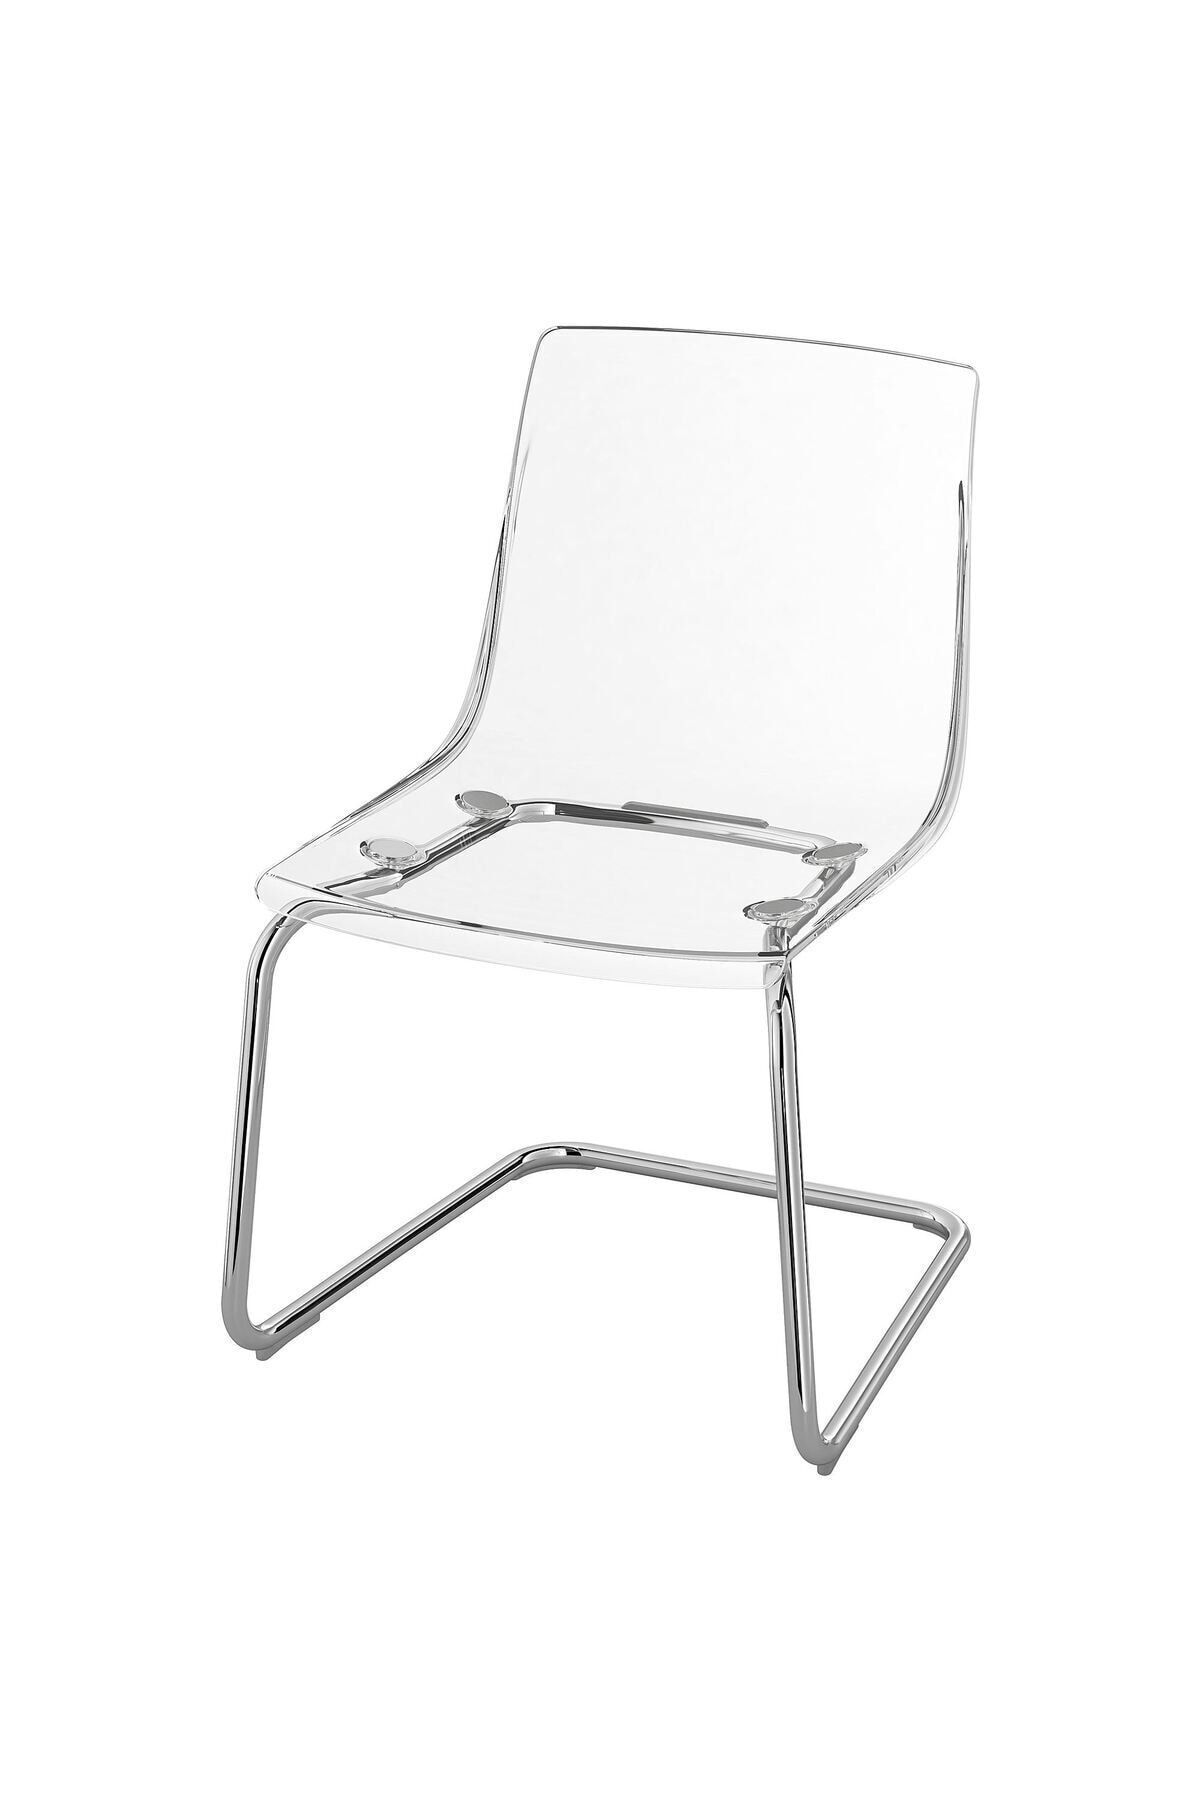 IKEA AKDENİZ TOBIAS şeffaf-krom kaplama plastik sandalye